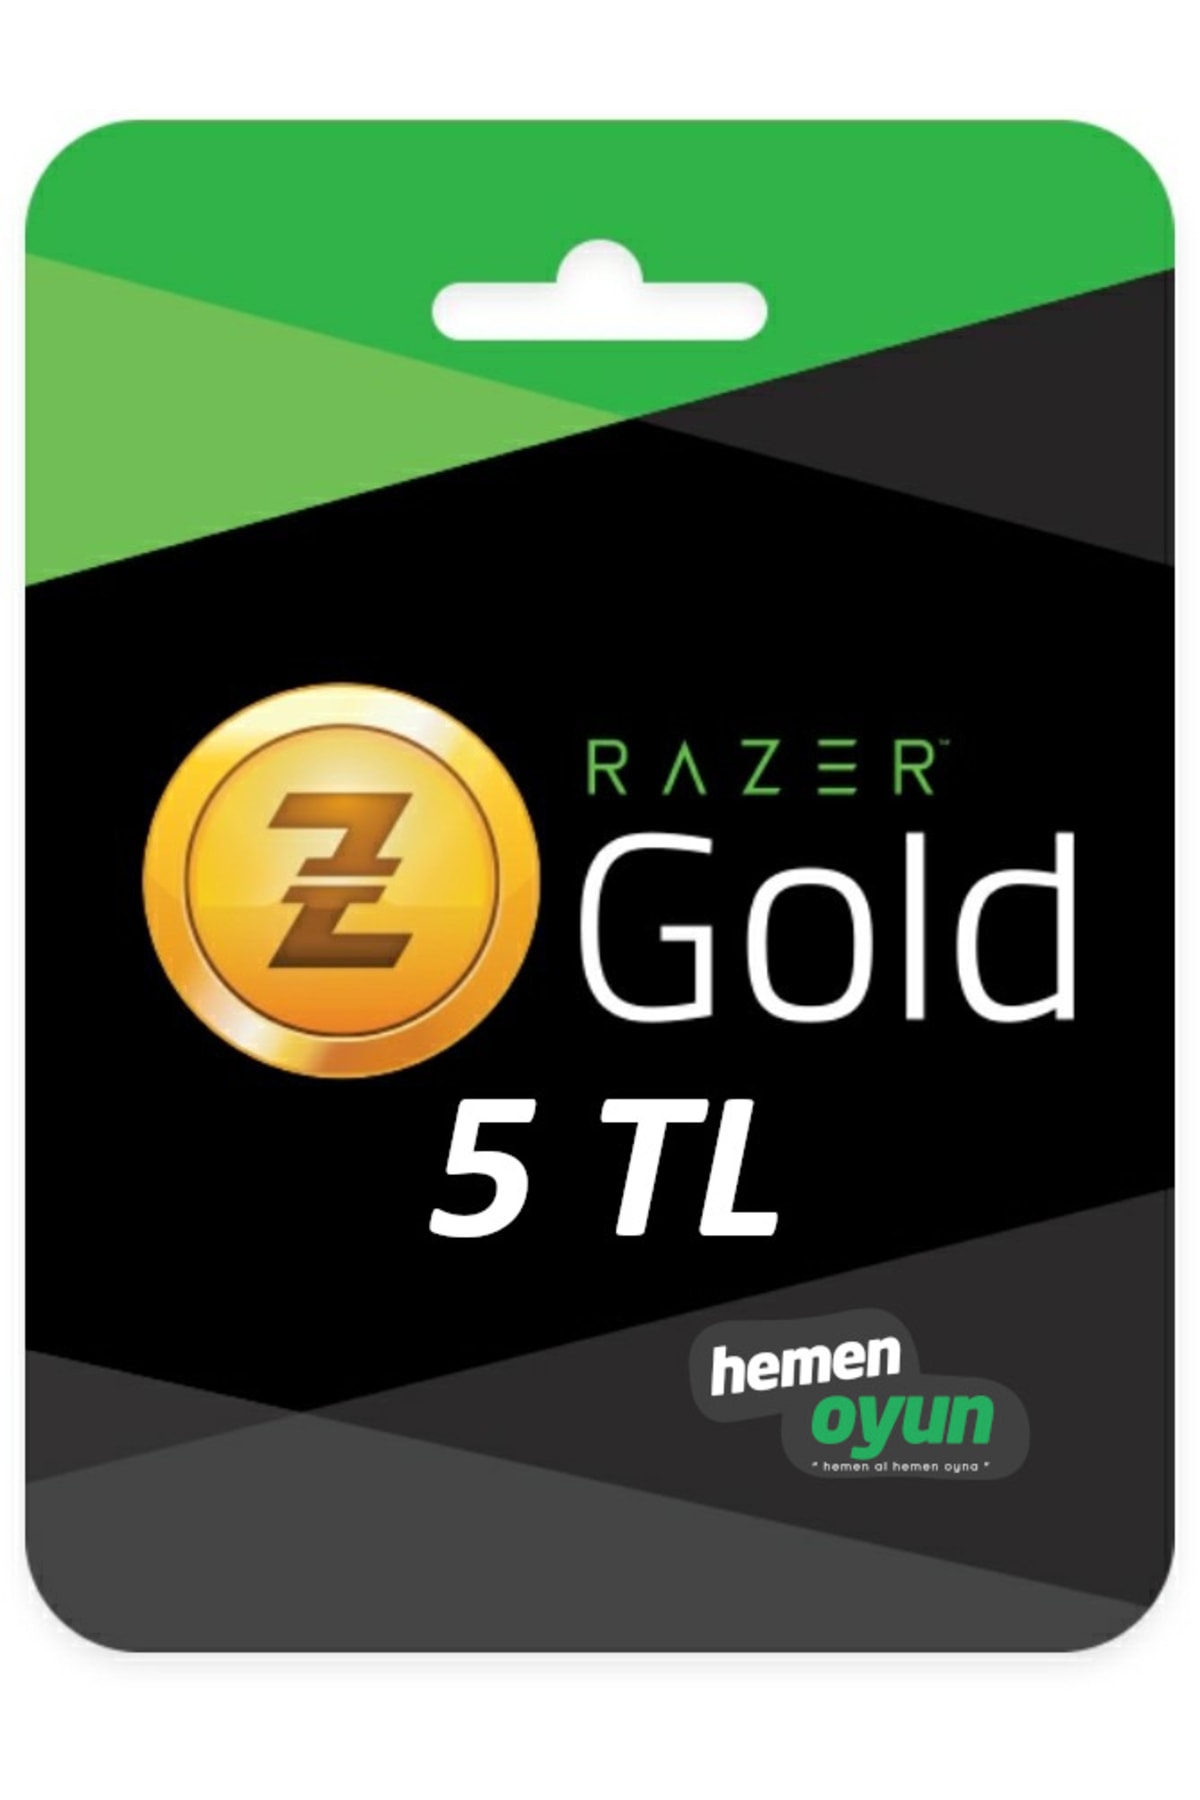 hemenoyun Razer Gold 5 Tl